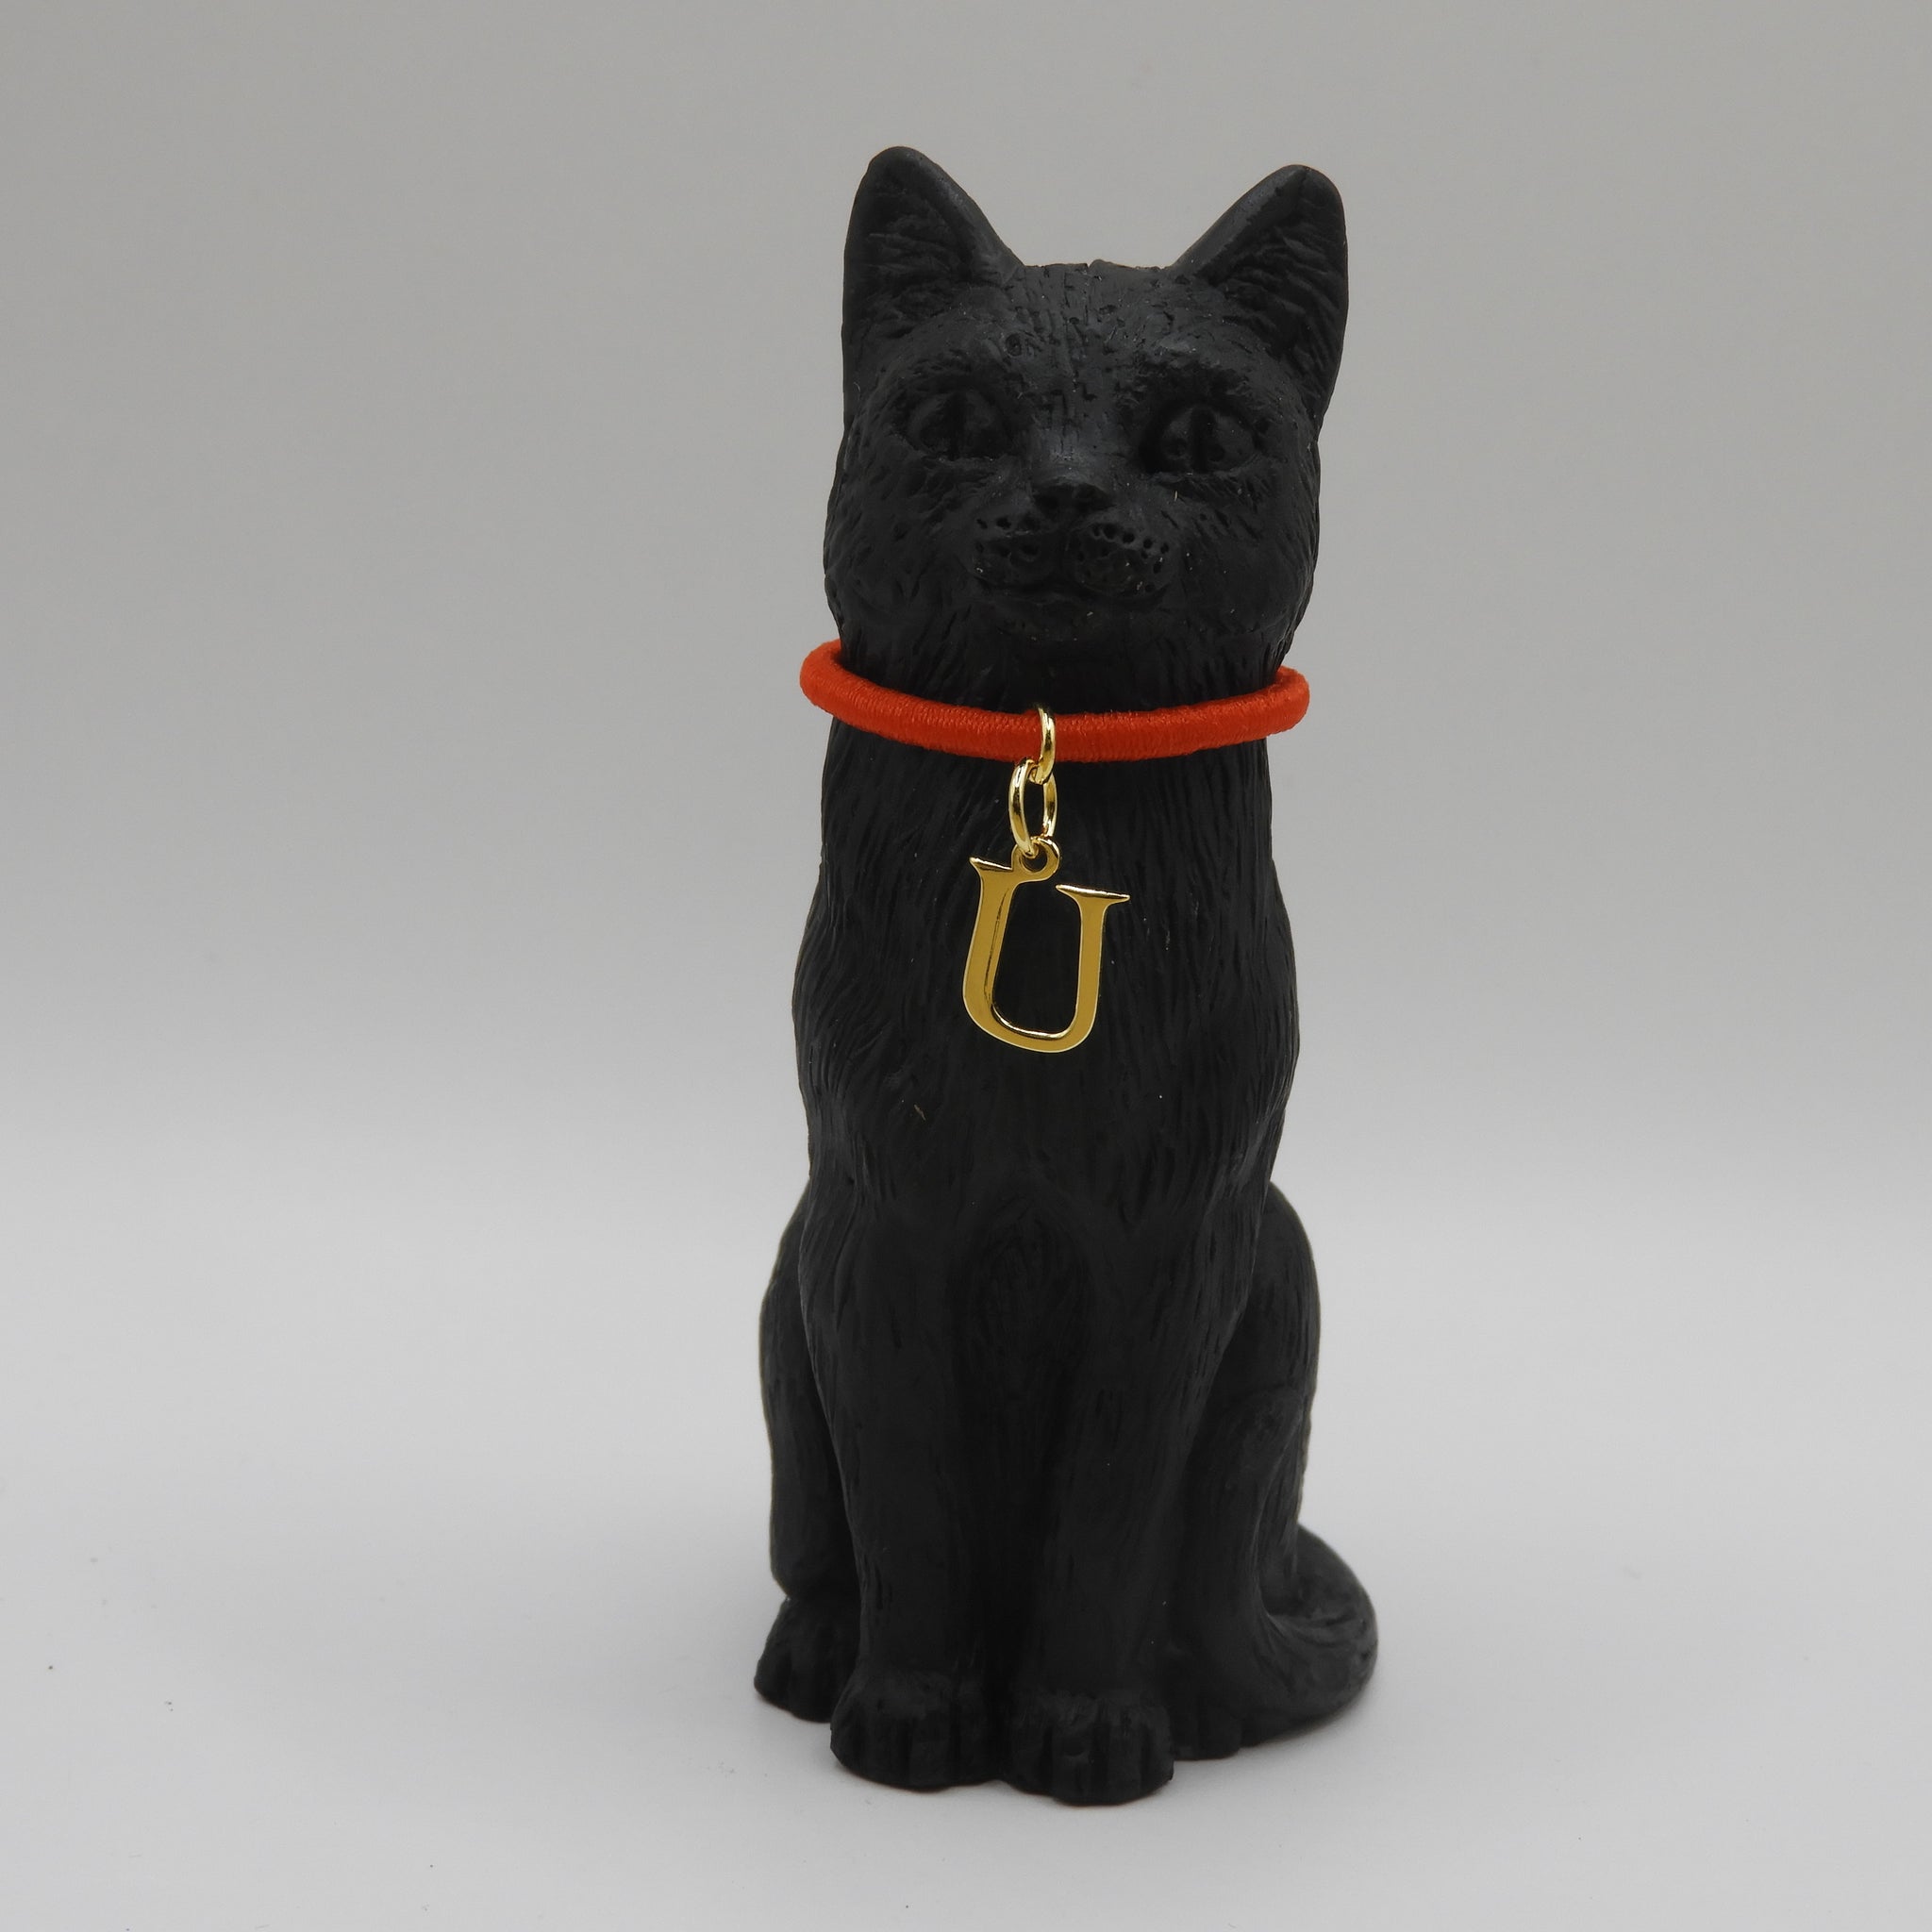 8cm Original Lucky Cat with Initial U Charm